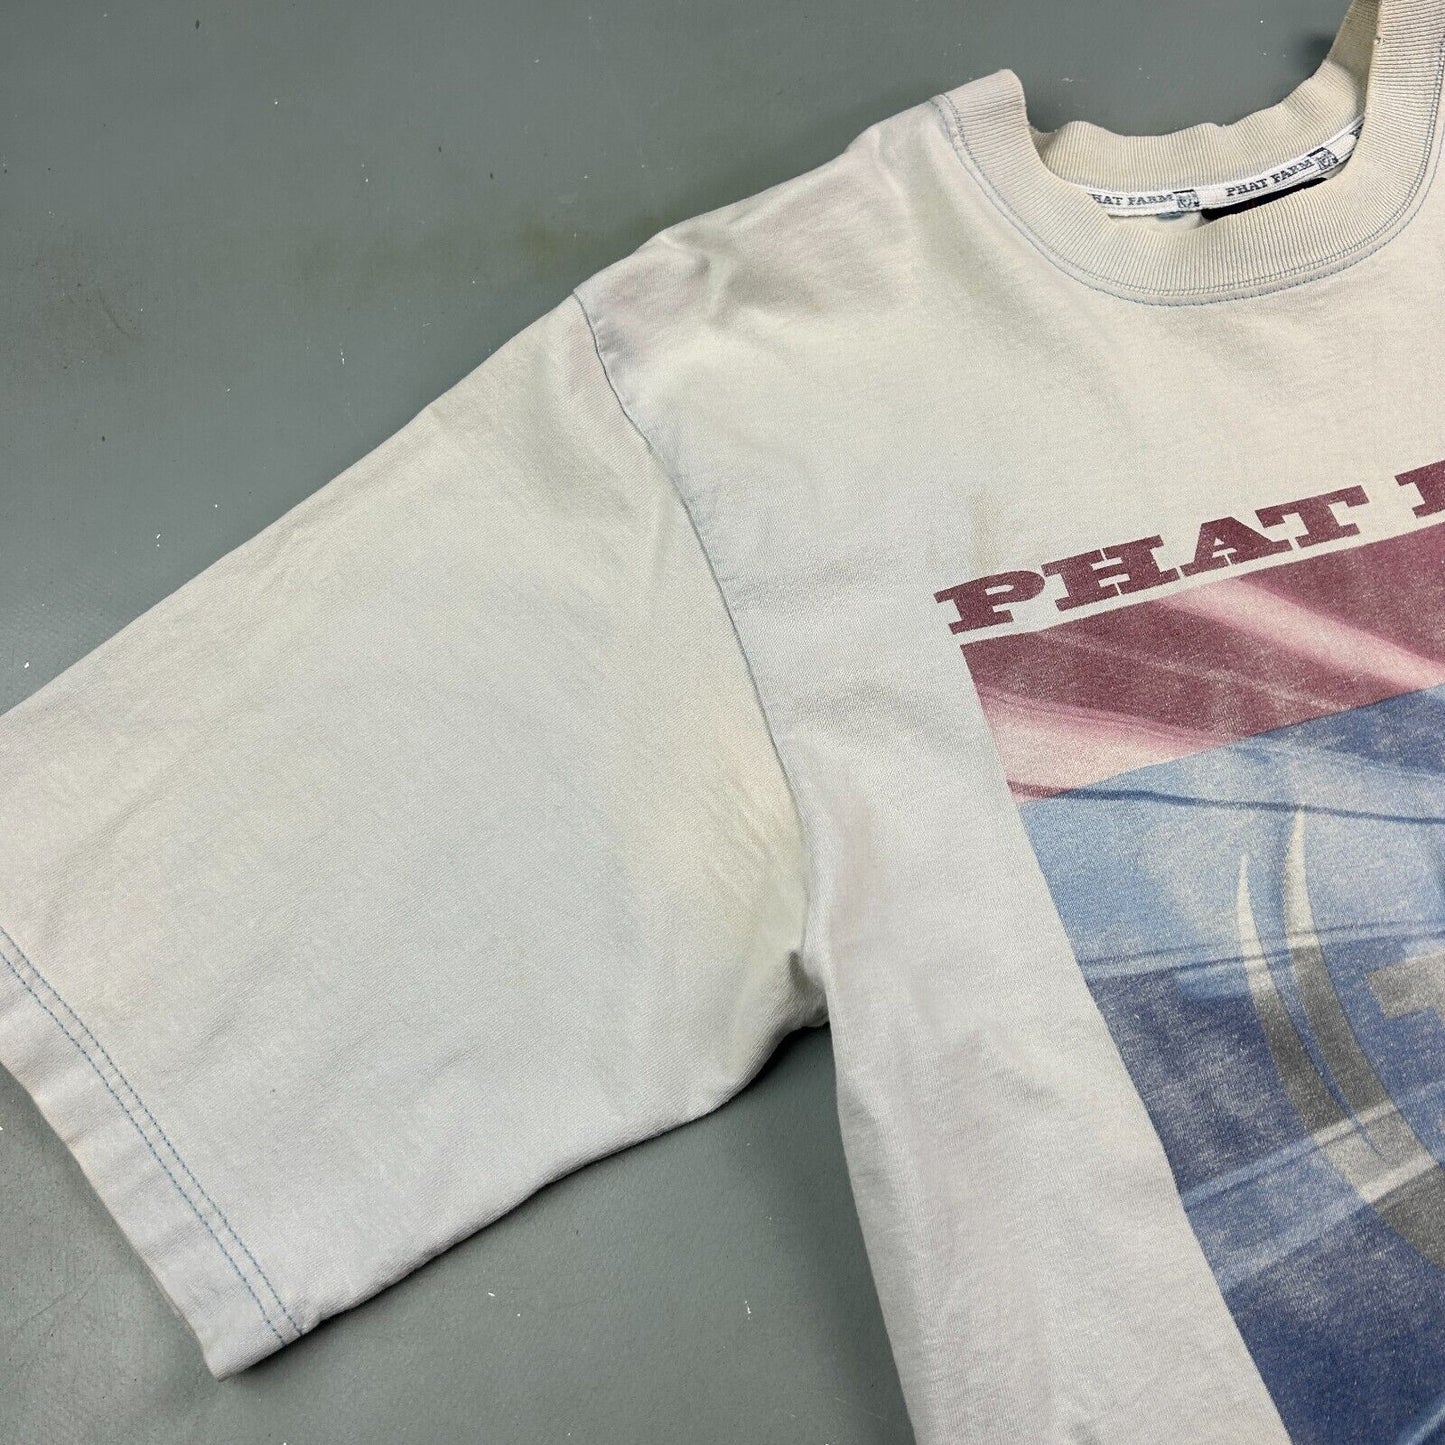 VINTAGE | Phat Farm American Flava Faded T-Shirt sz Med Tall* Adult